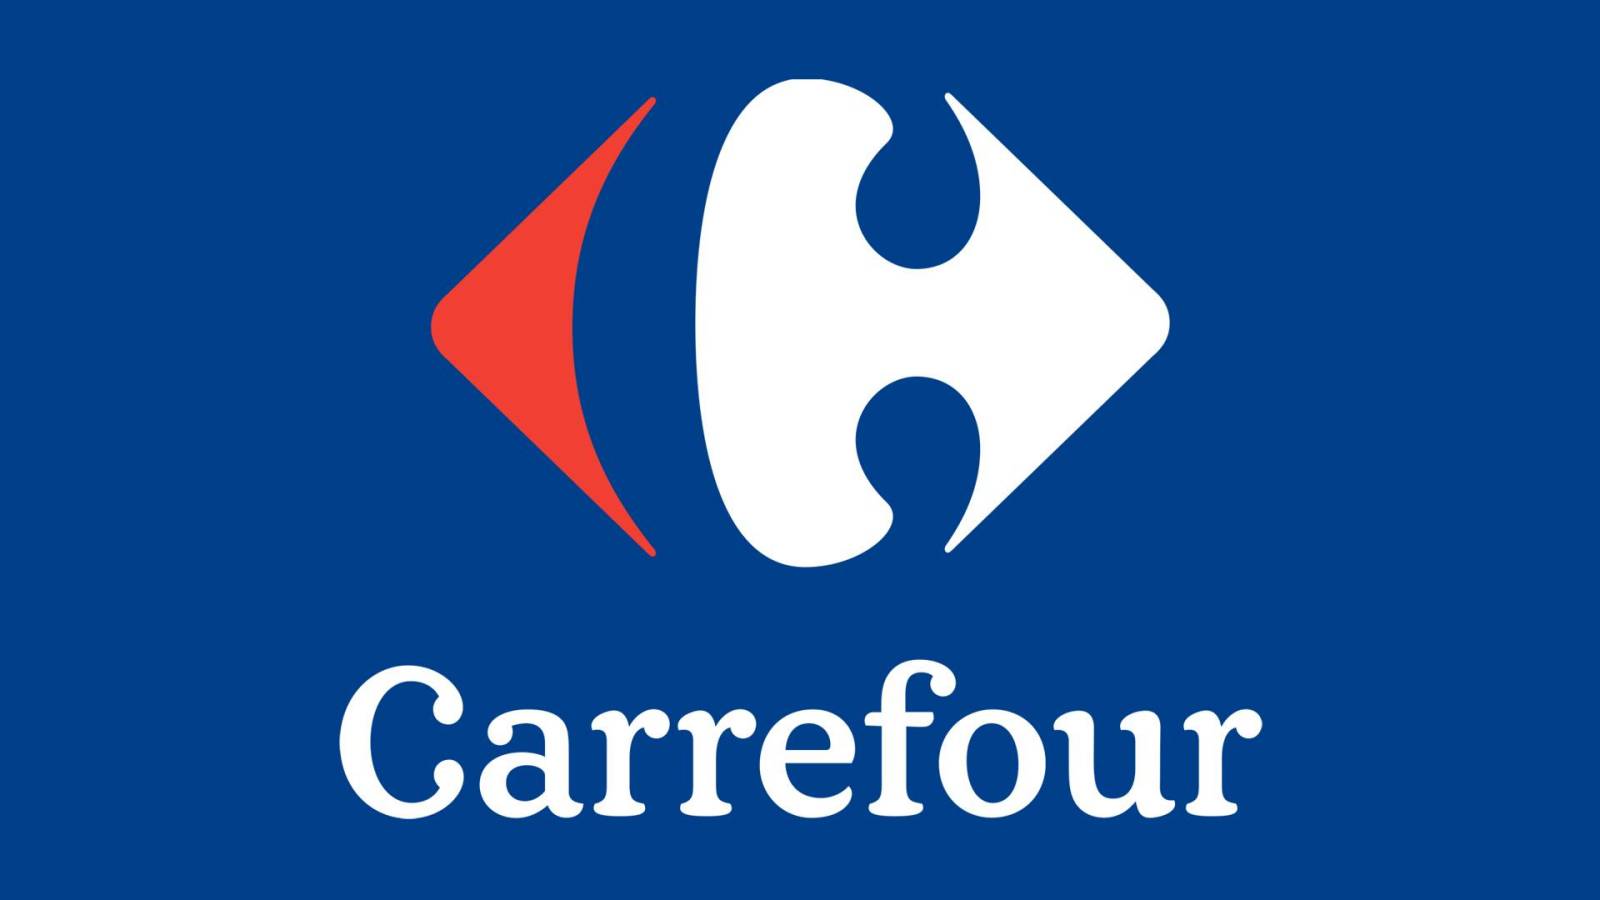 Carrefour Important Anunt OFICIAL Vizeaza Clientii Romani